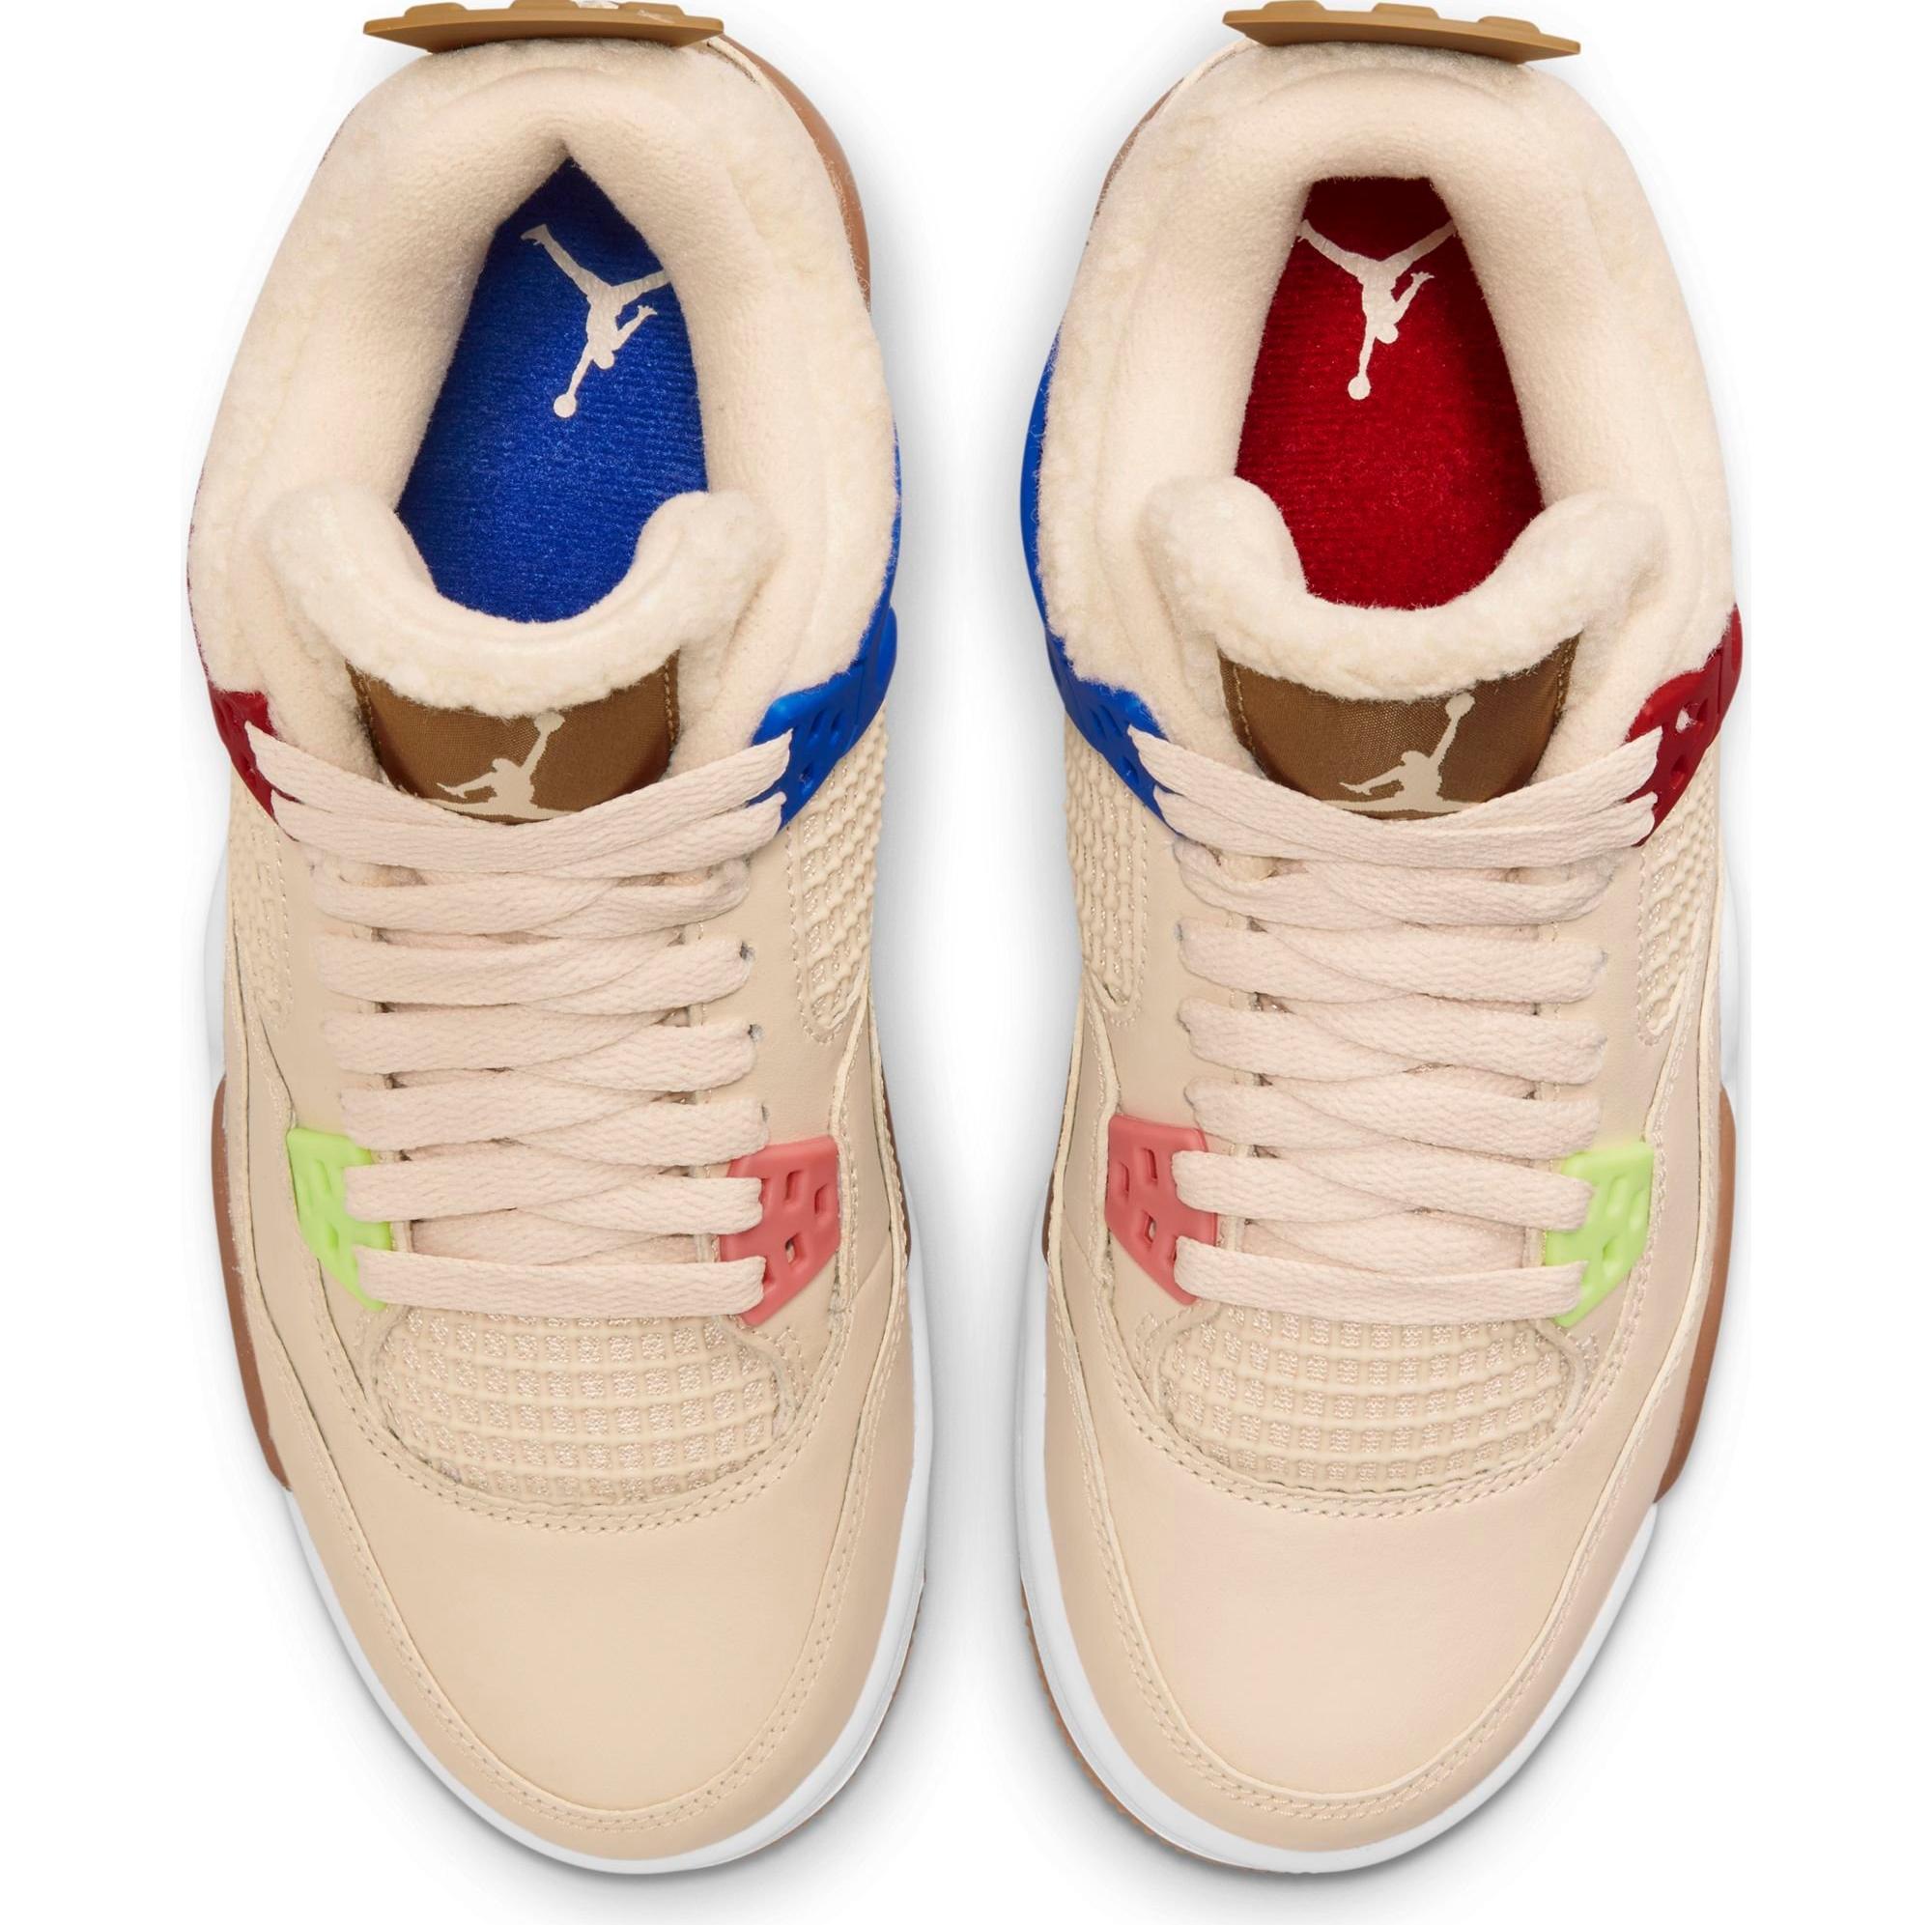 Sneakers Release – Jordan 4 Retro “Messy Room”